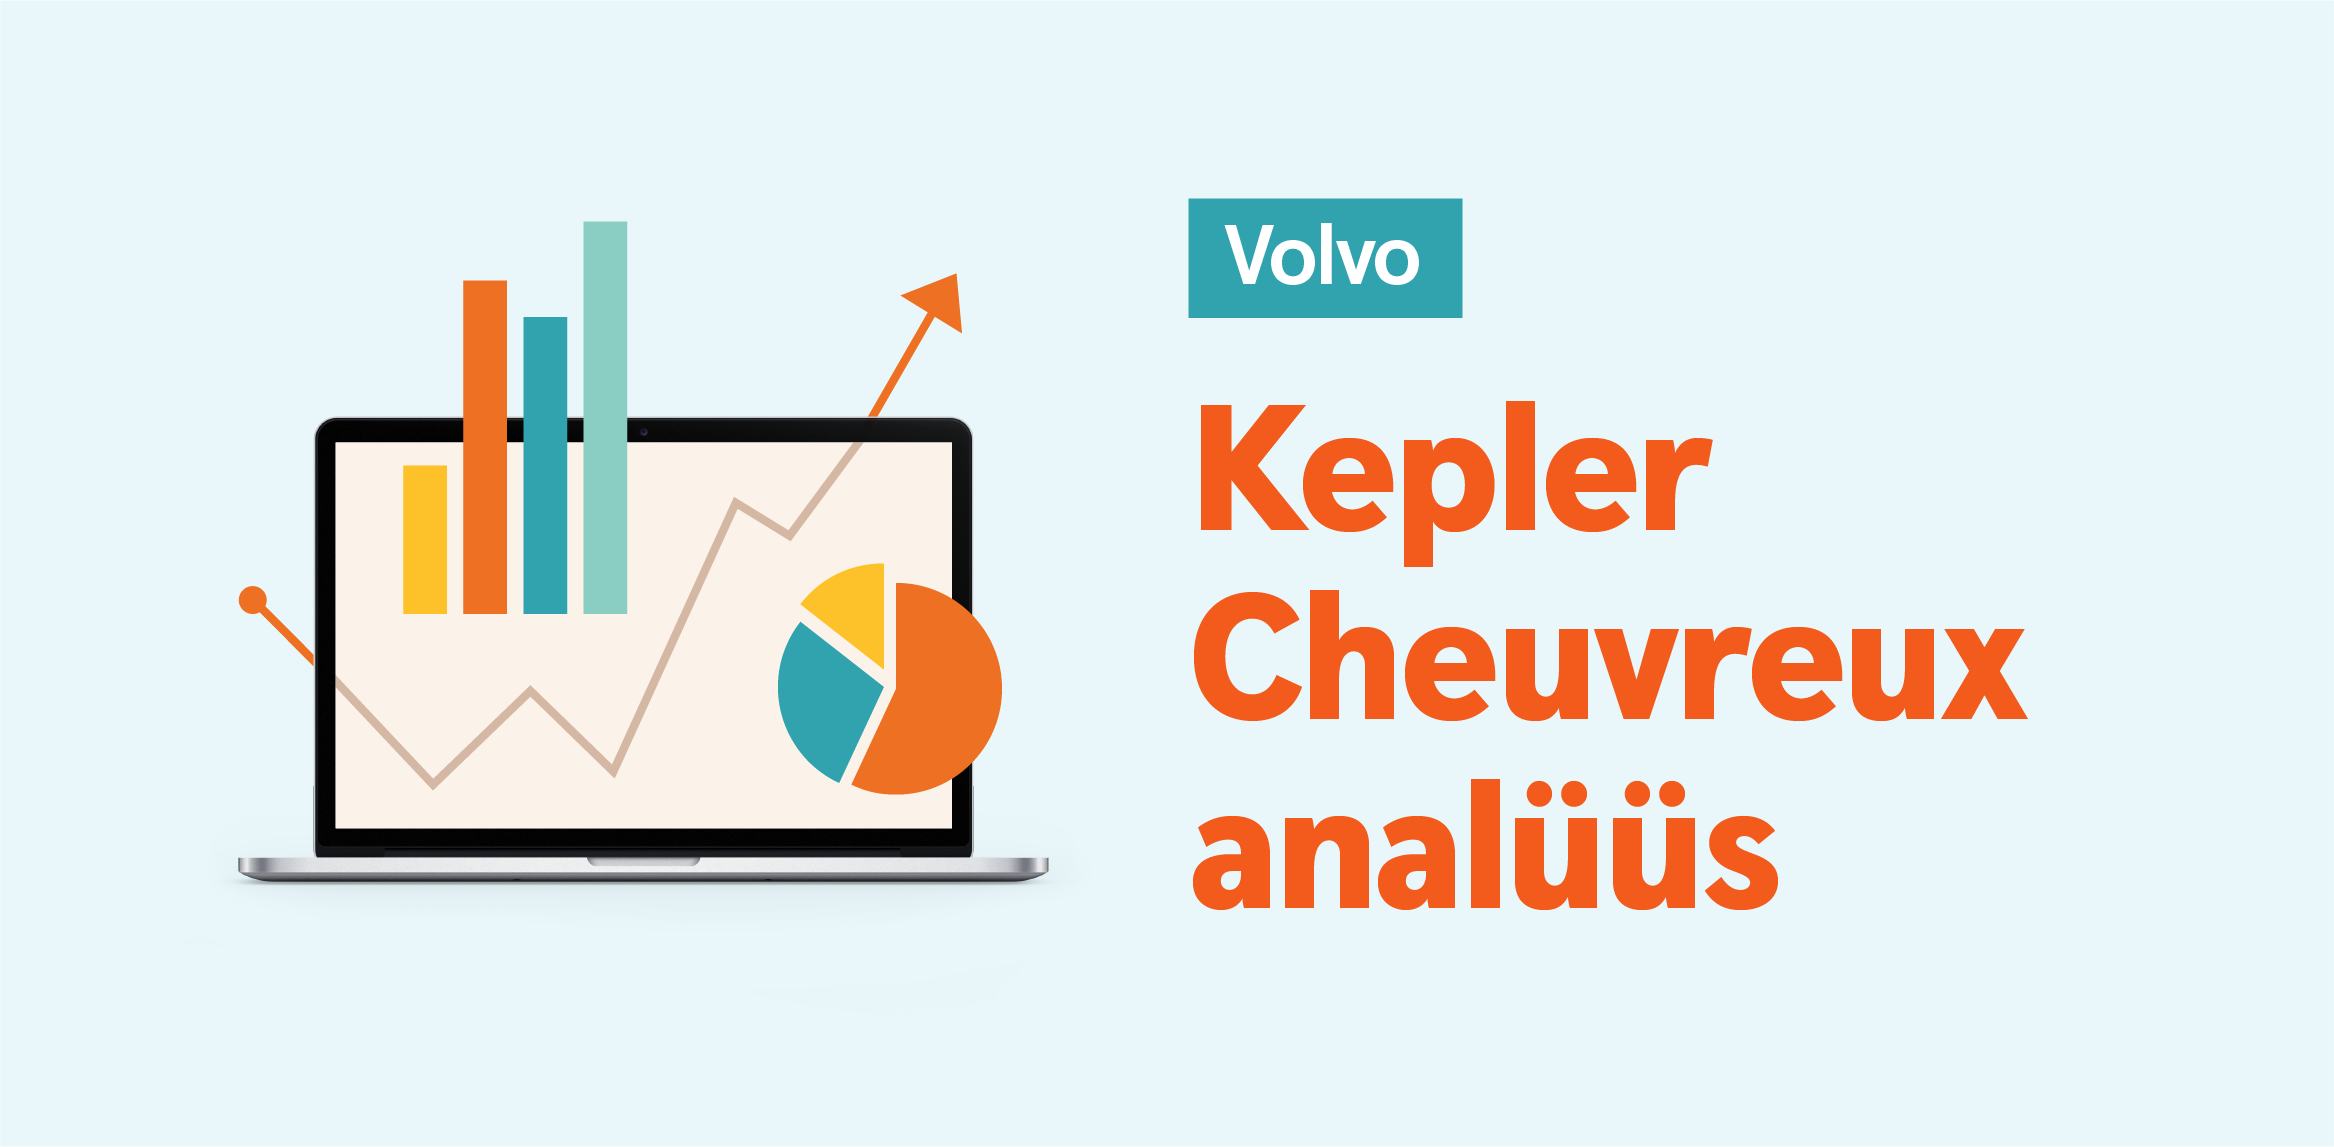 Kepler Cheuvreux tõstis Volvo aktsia hinnasihti